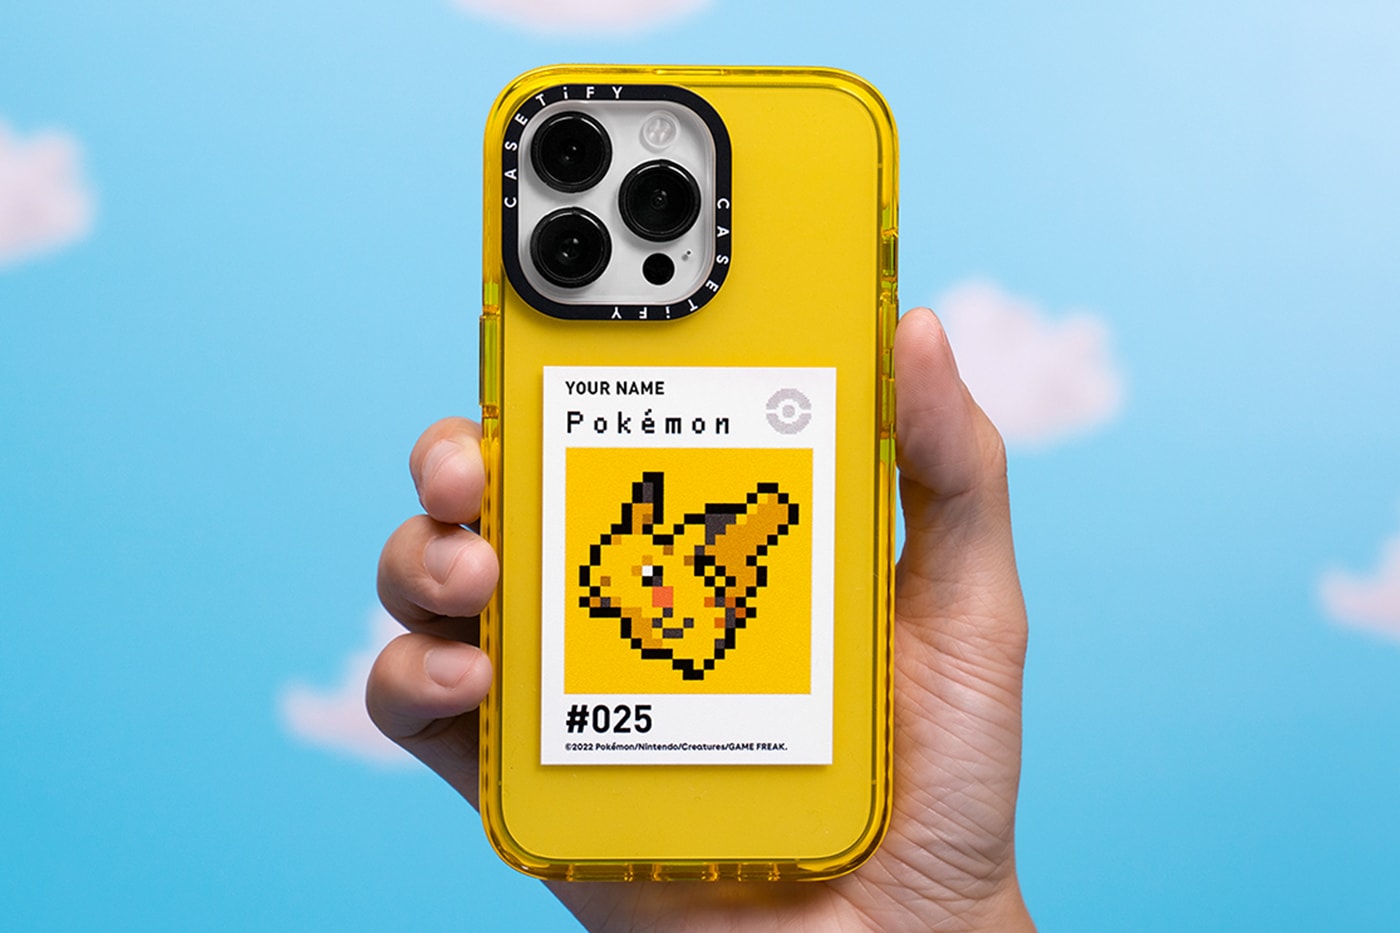 Download Pokémon Brilliant Diamond wallpapers for mobile phone